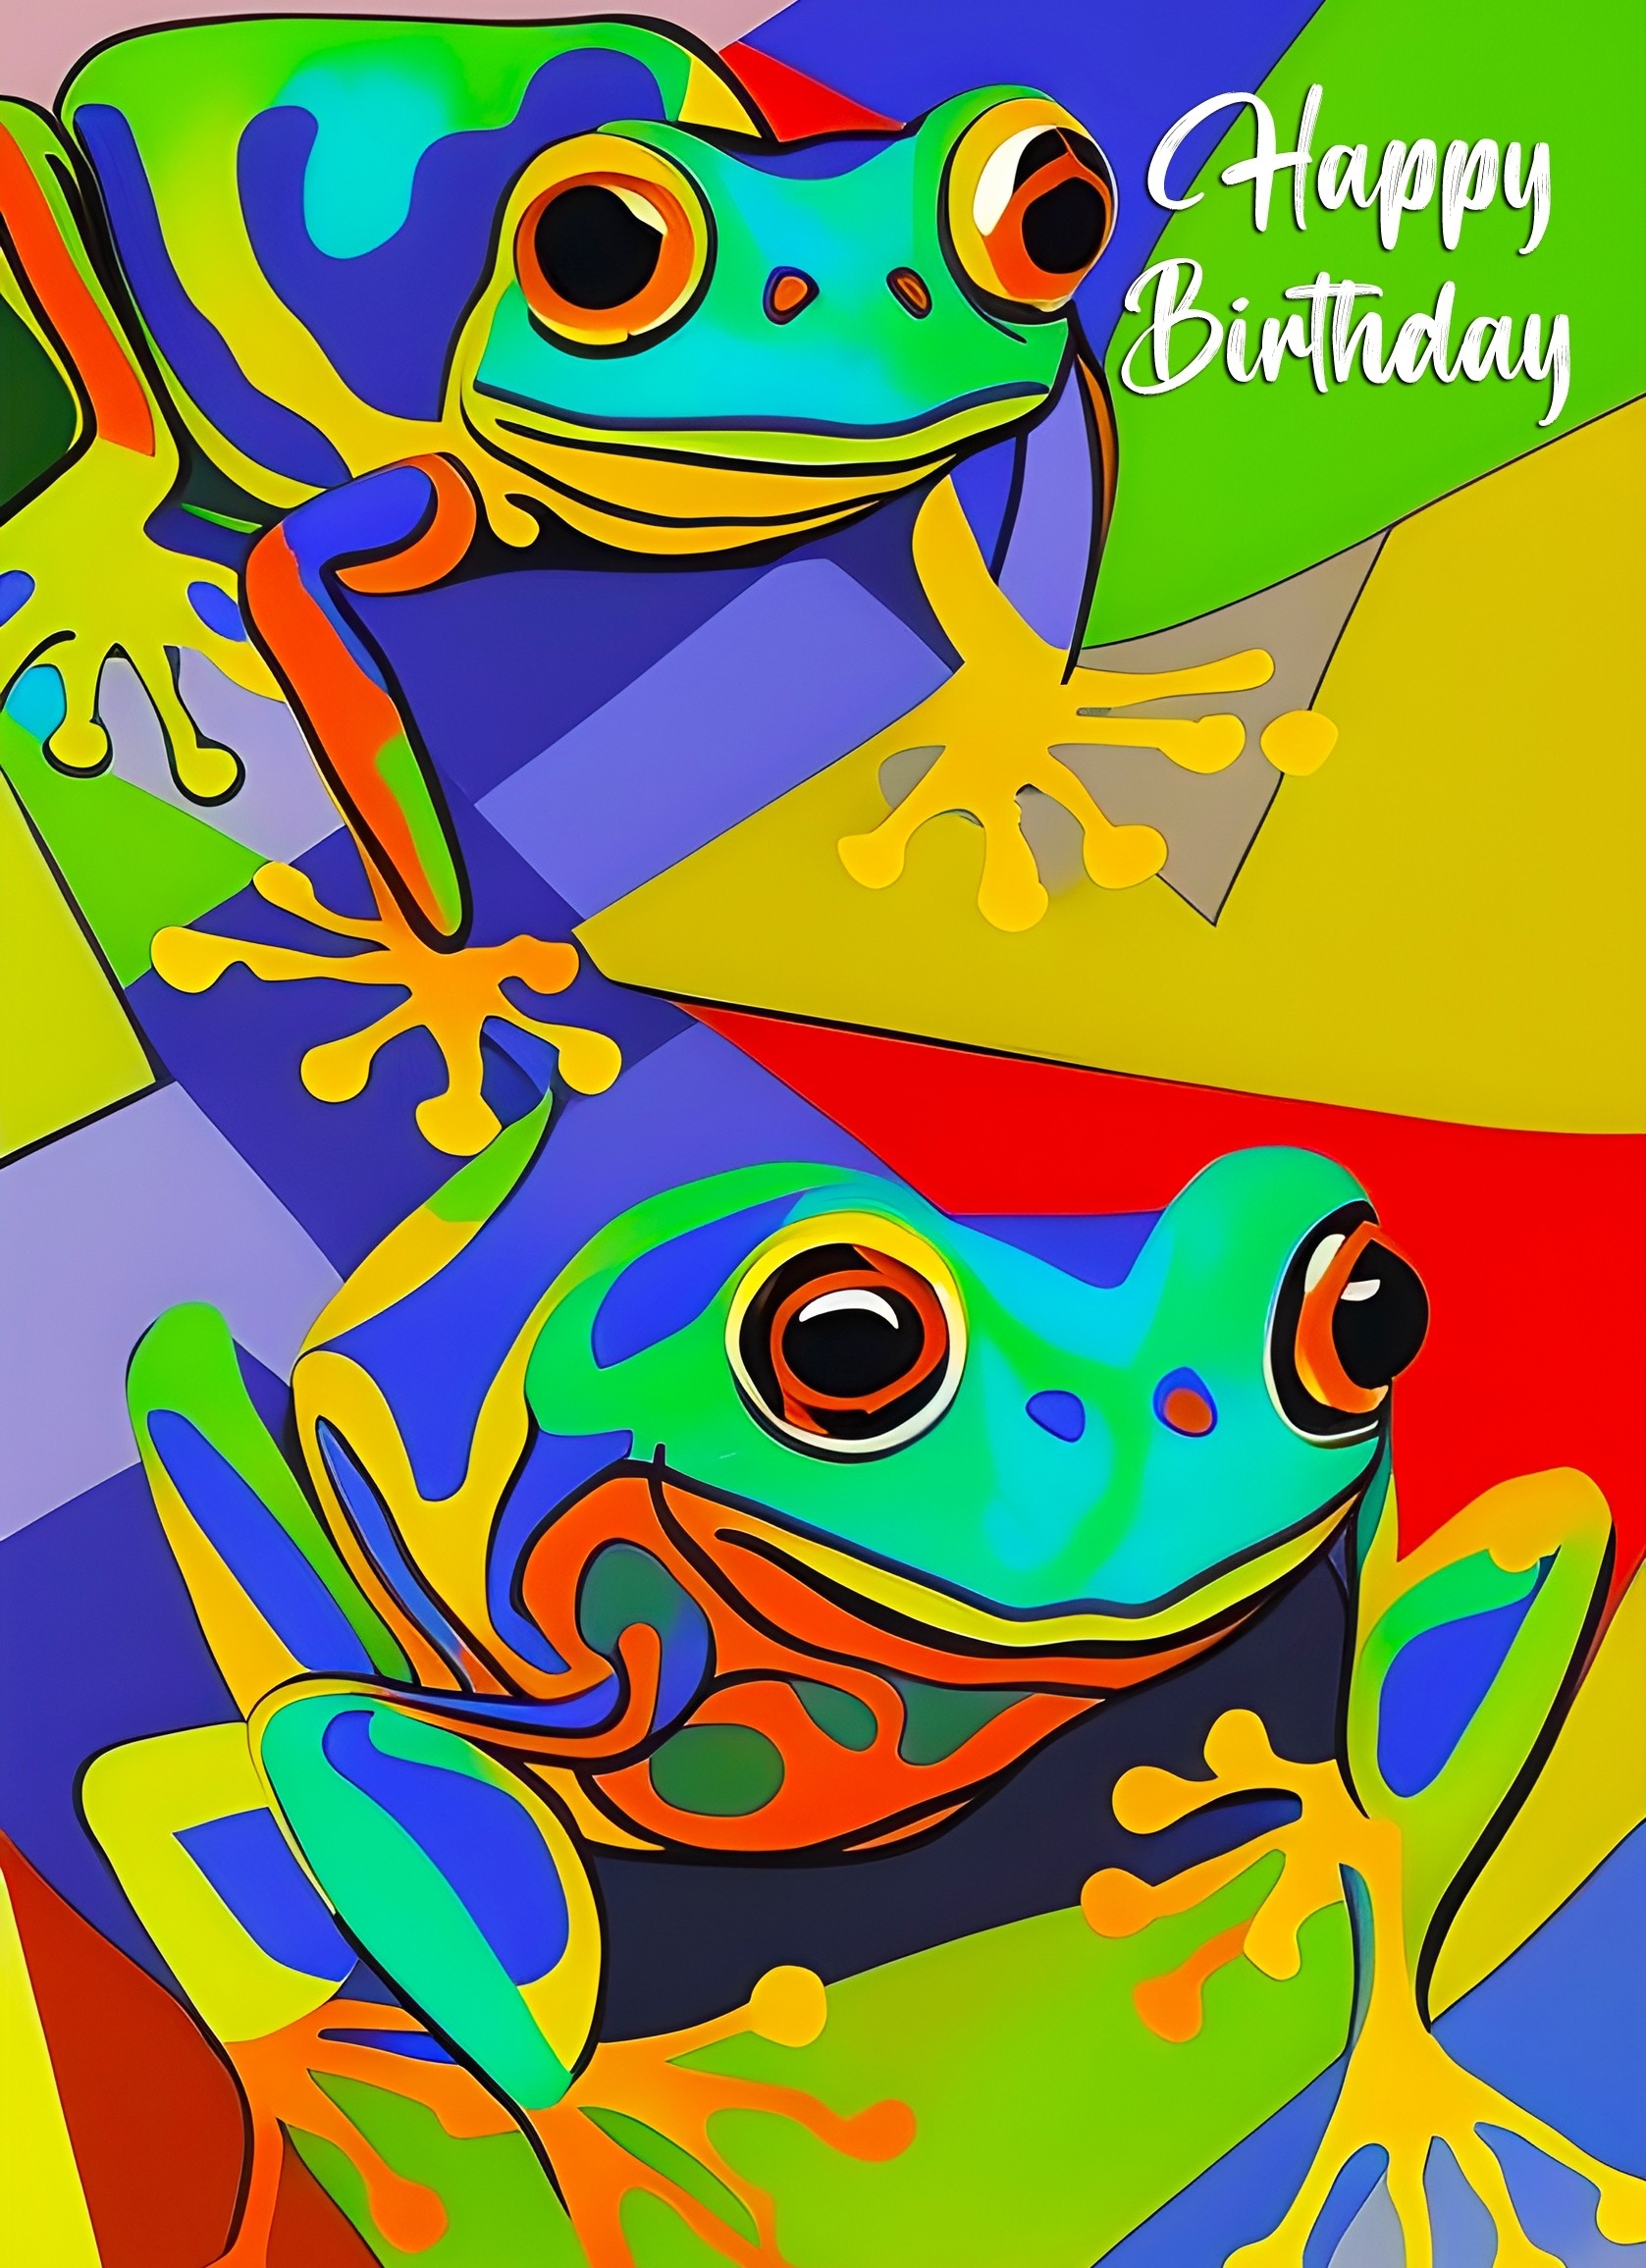 Frog Animal Colourful Abstract Art Birthday Card